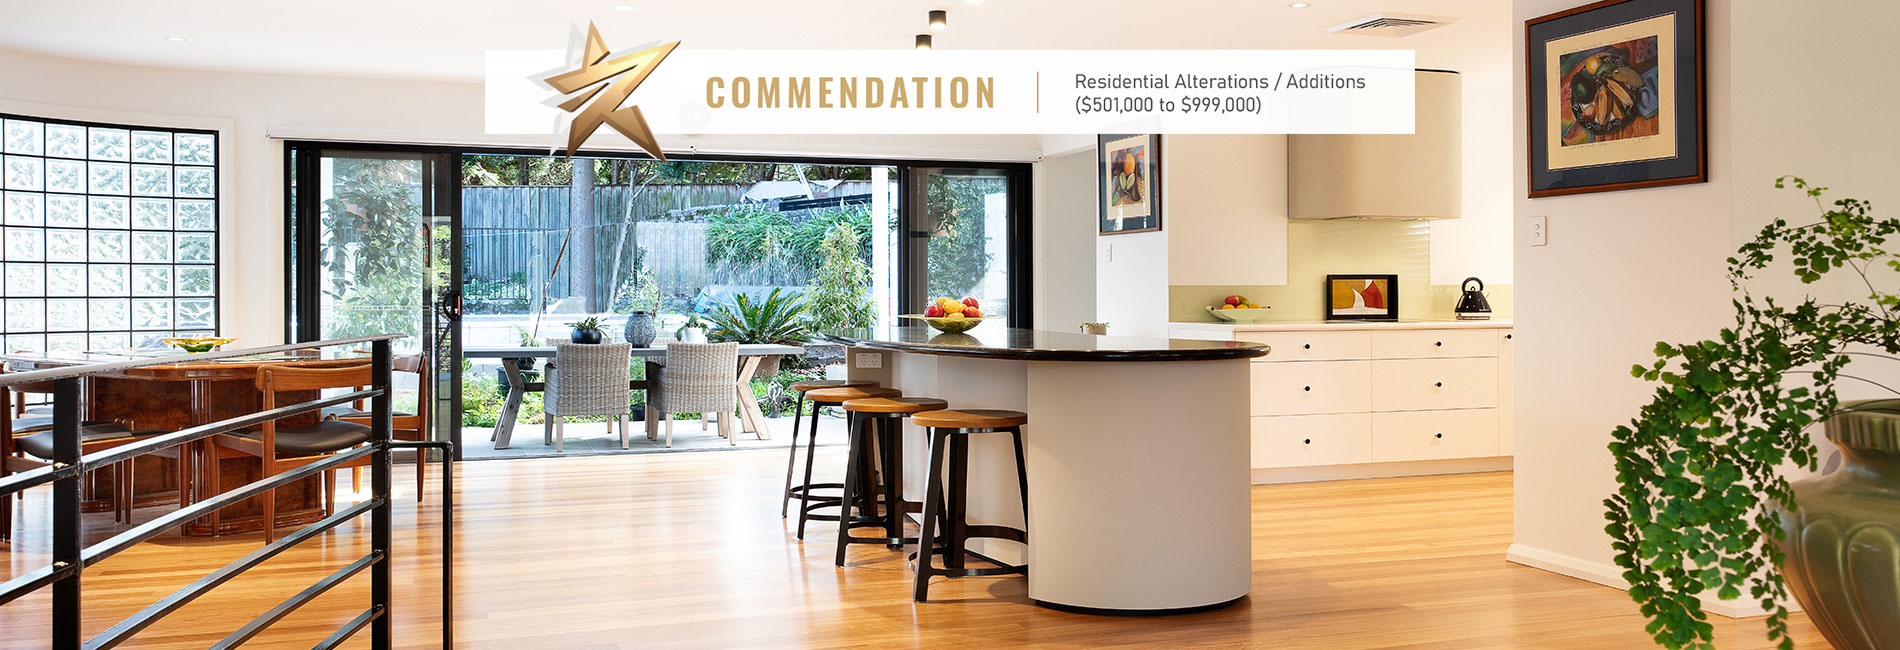 Design excellence national award home interior renovation Sydney